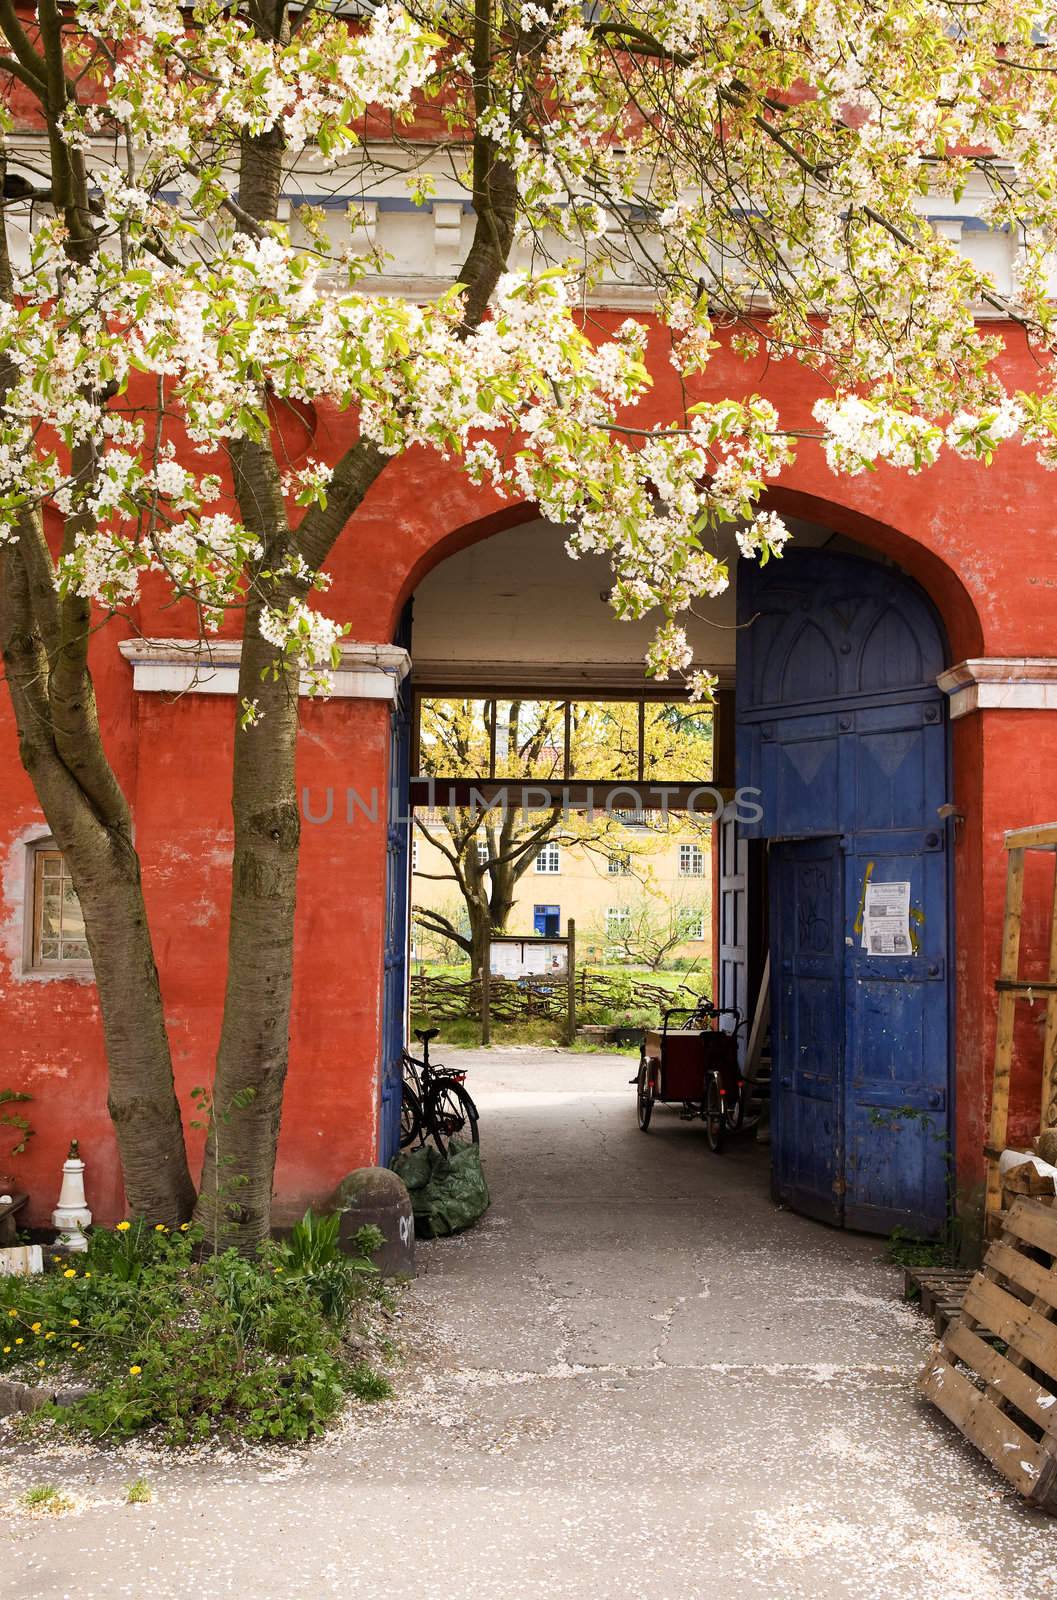 A door in Christiania - an area of Copenhagen, Denmark